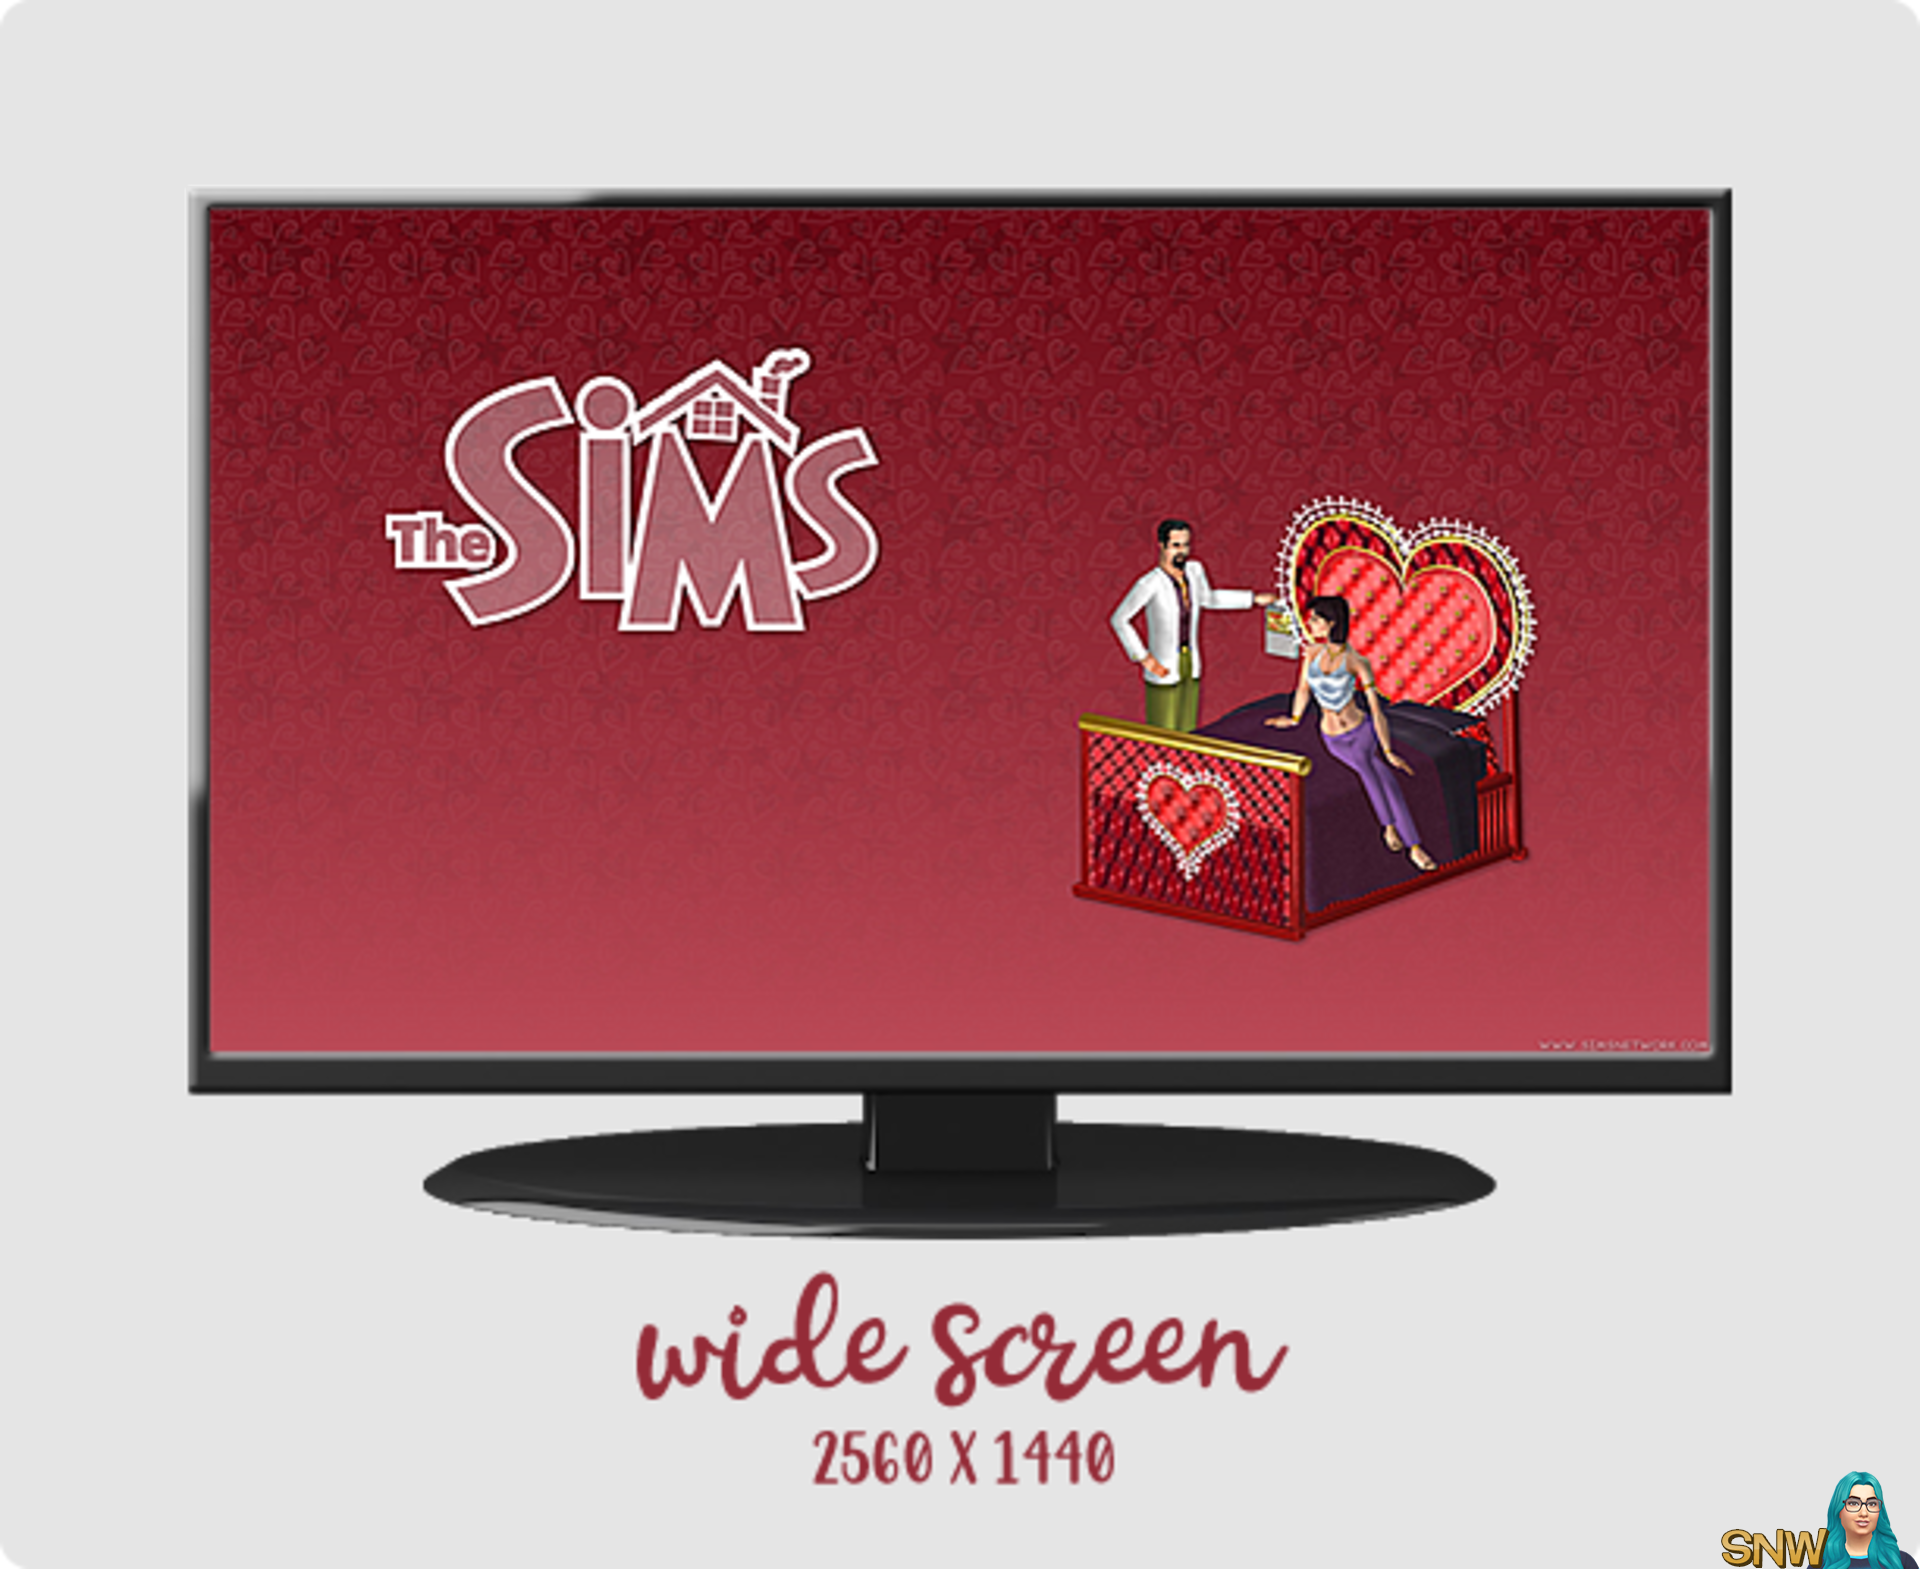 The Sims Valentine's Day widescreen wallpaper love heart bed vibrating nostalgia retro